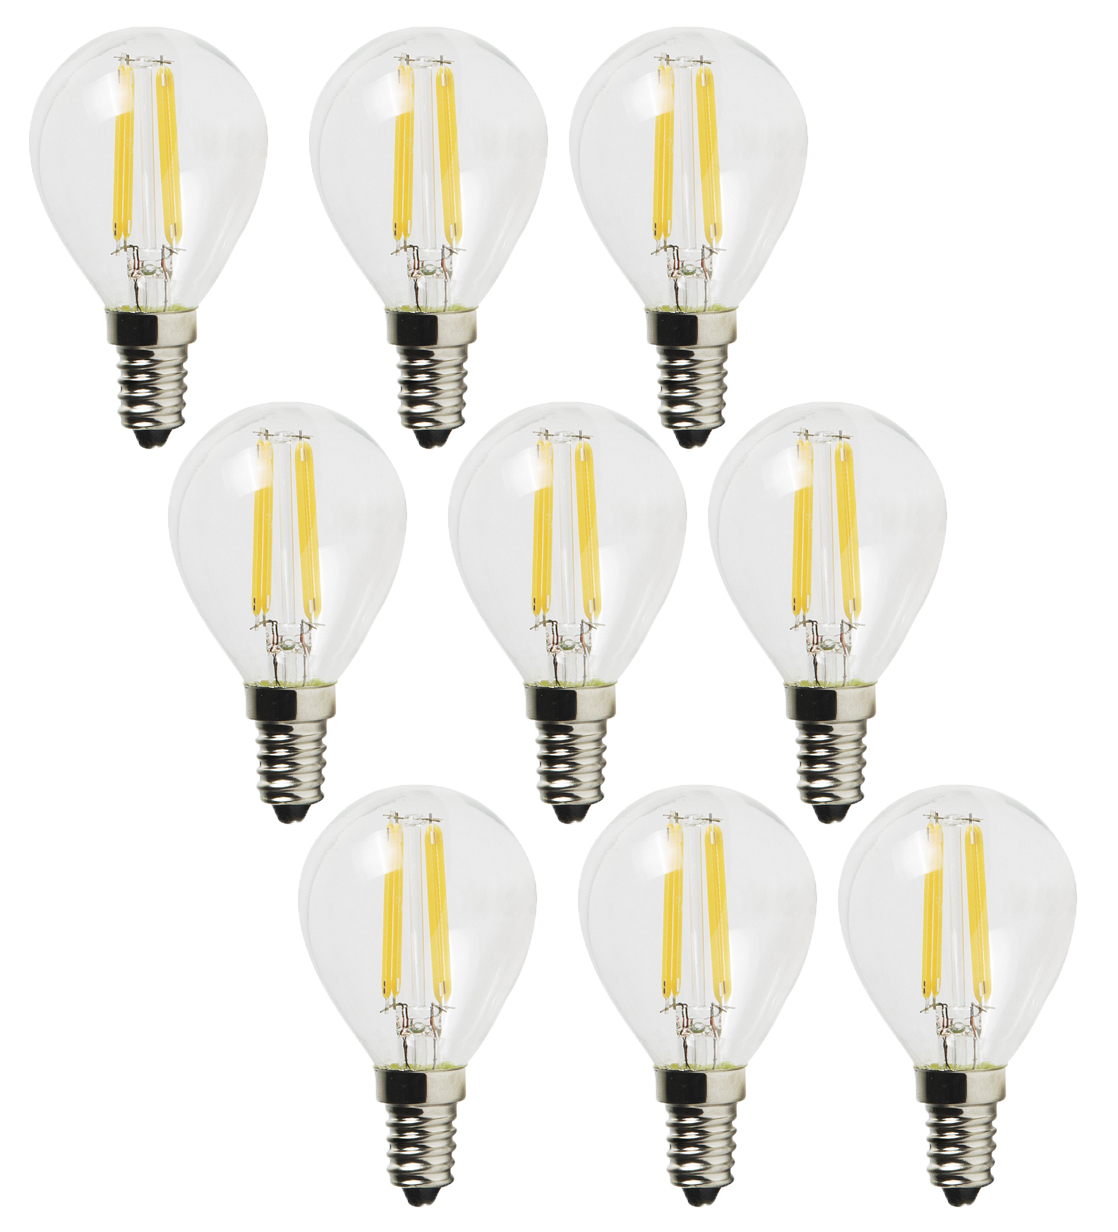 Светодиодная лампа VKlux BK-14W5G45 Edison, 5 Вт, 3000К, стекло 9 шт.